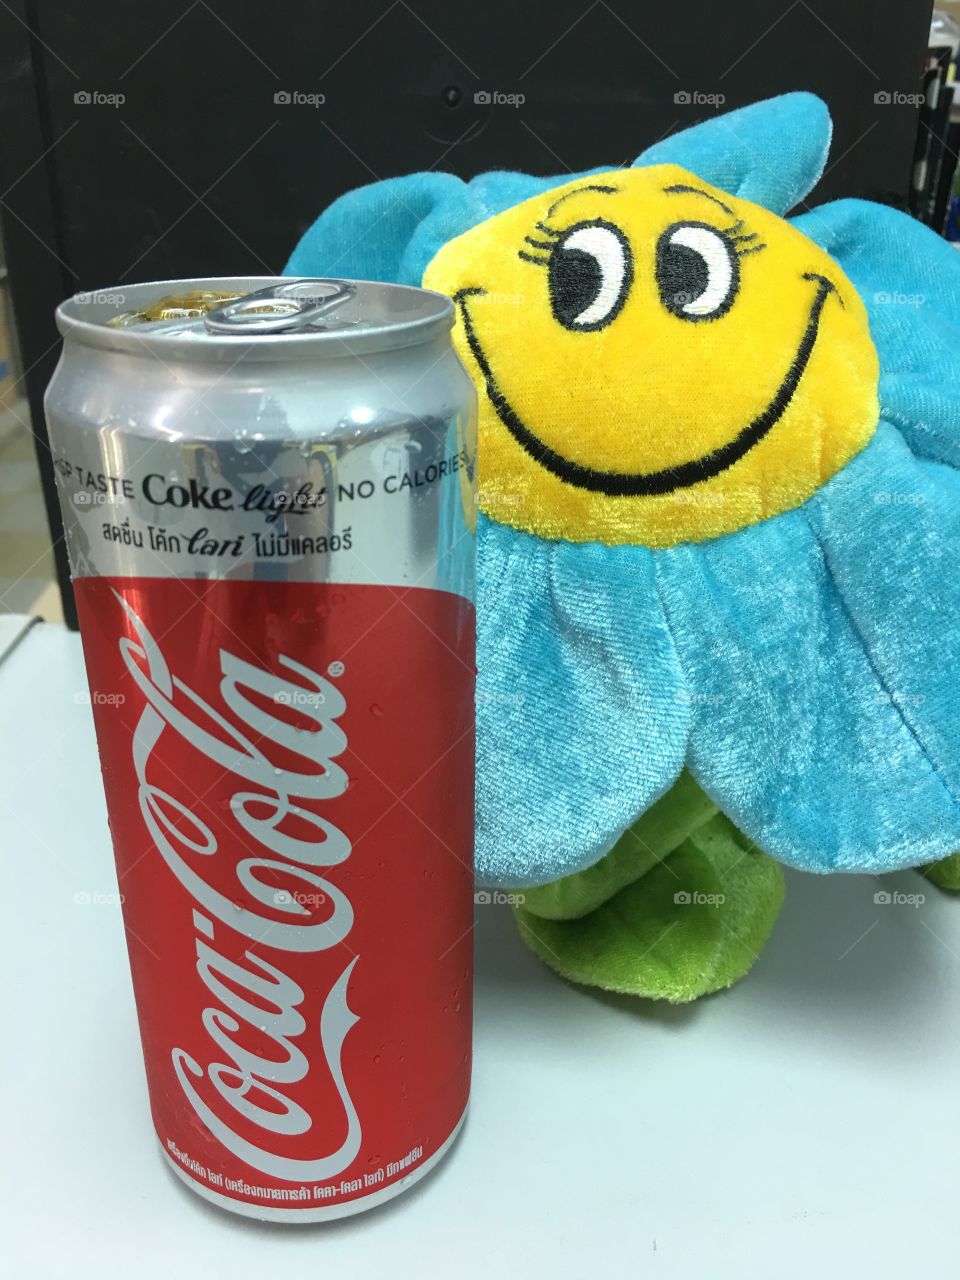 Coca-Cola 